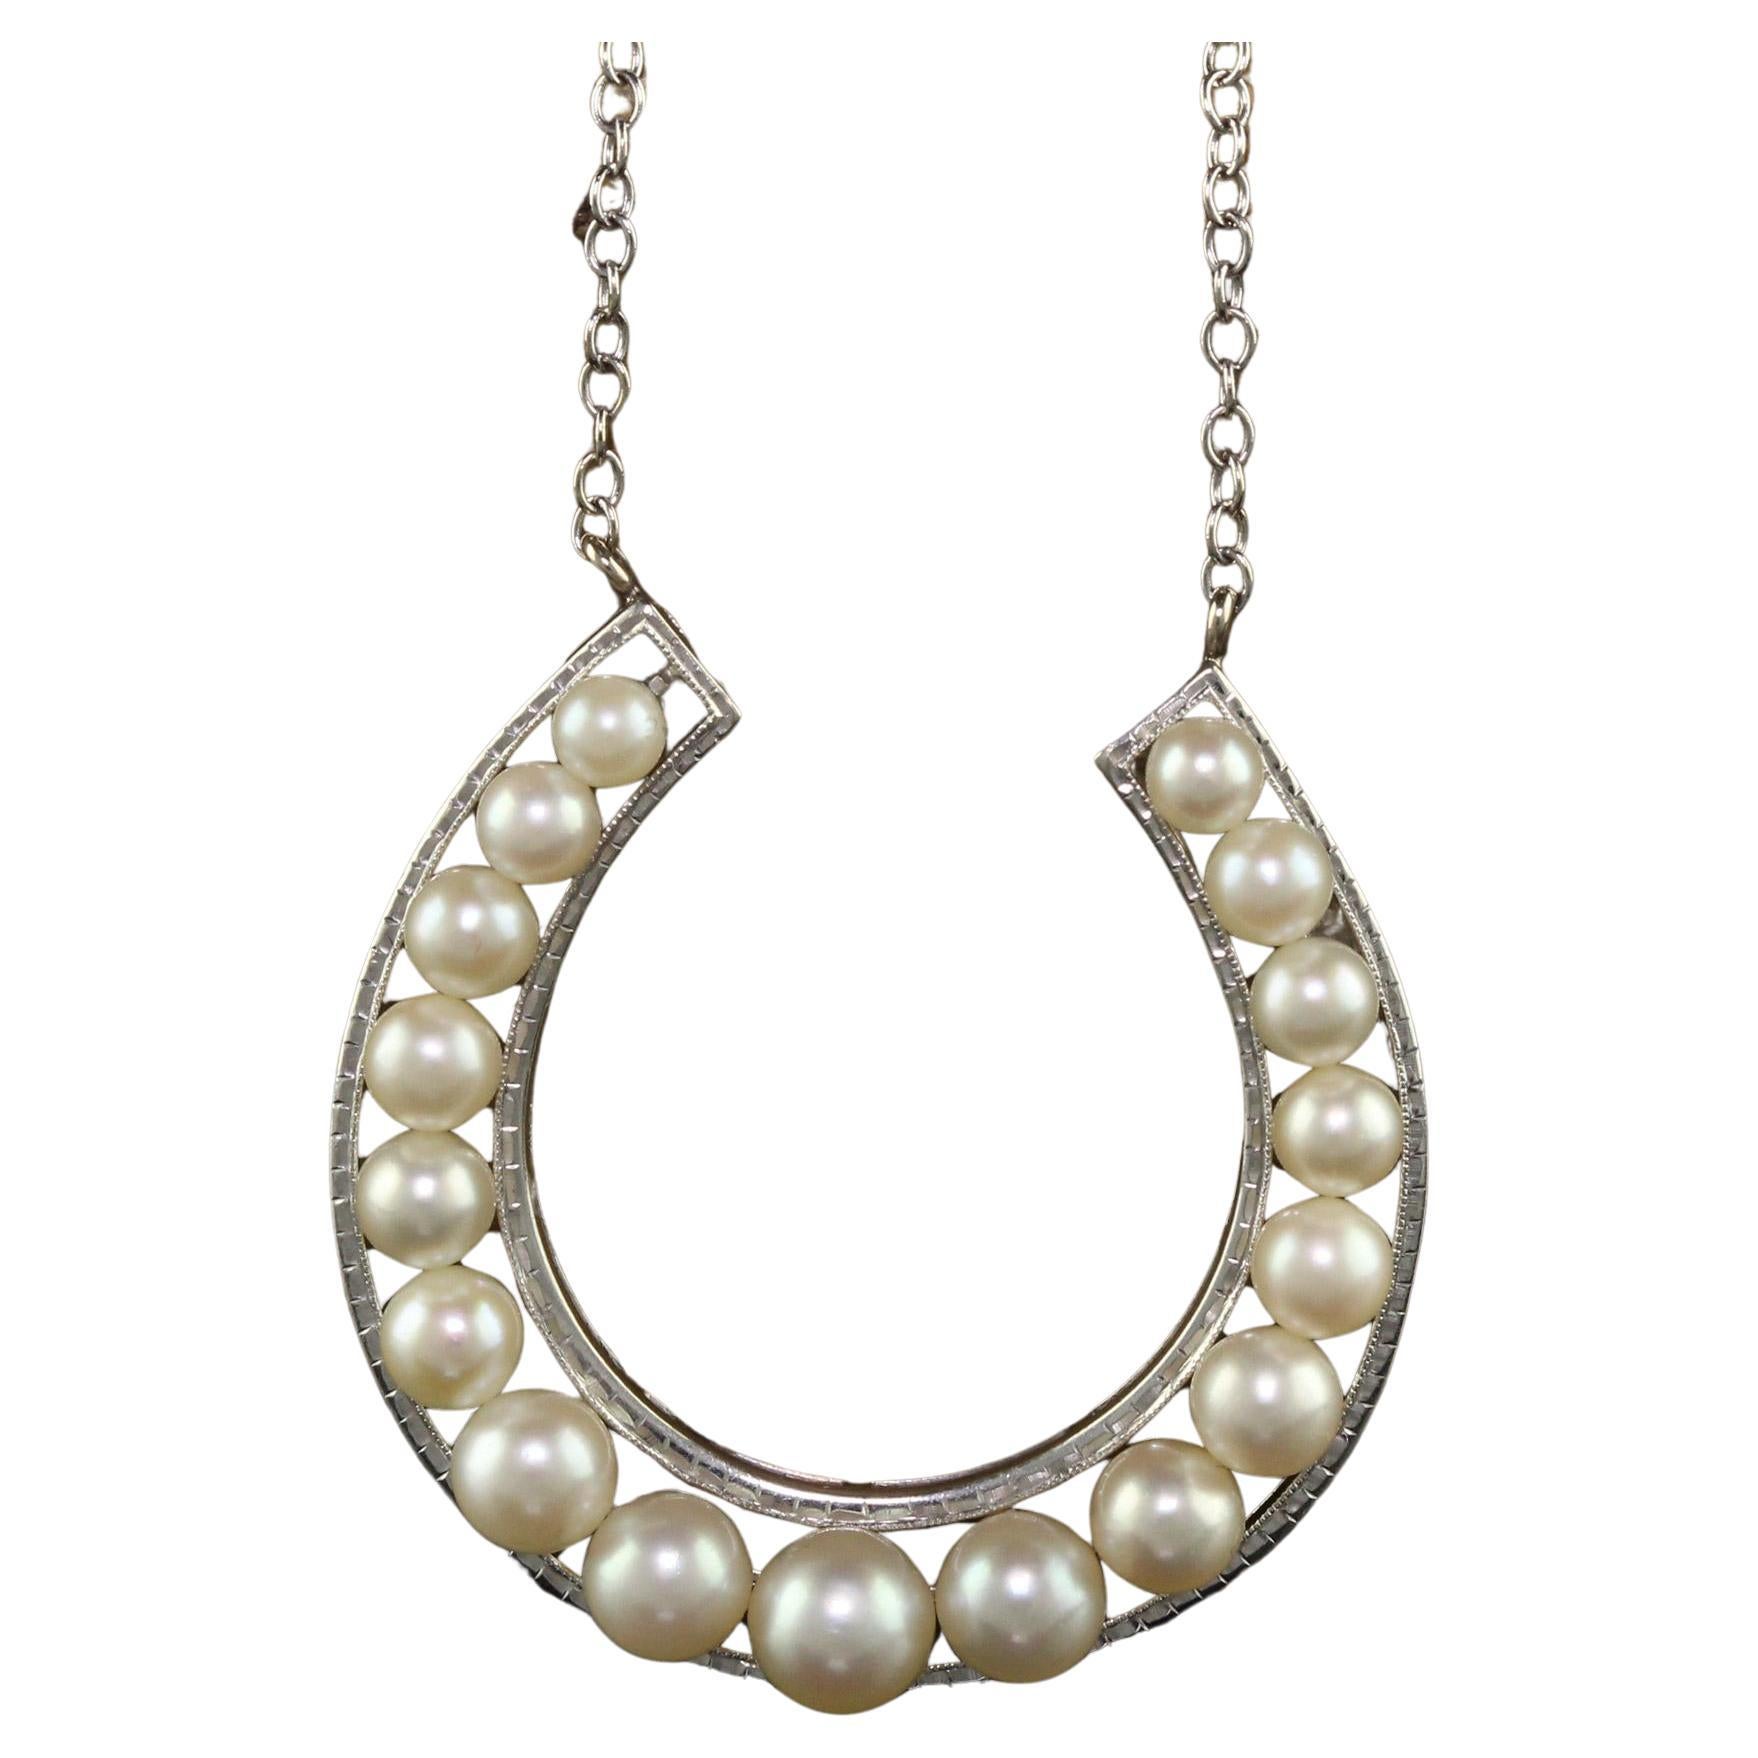 Mikimoto Akoya, collier pendentif fer à cheval vintage en or blanc 18 carats avec perles